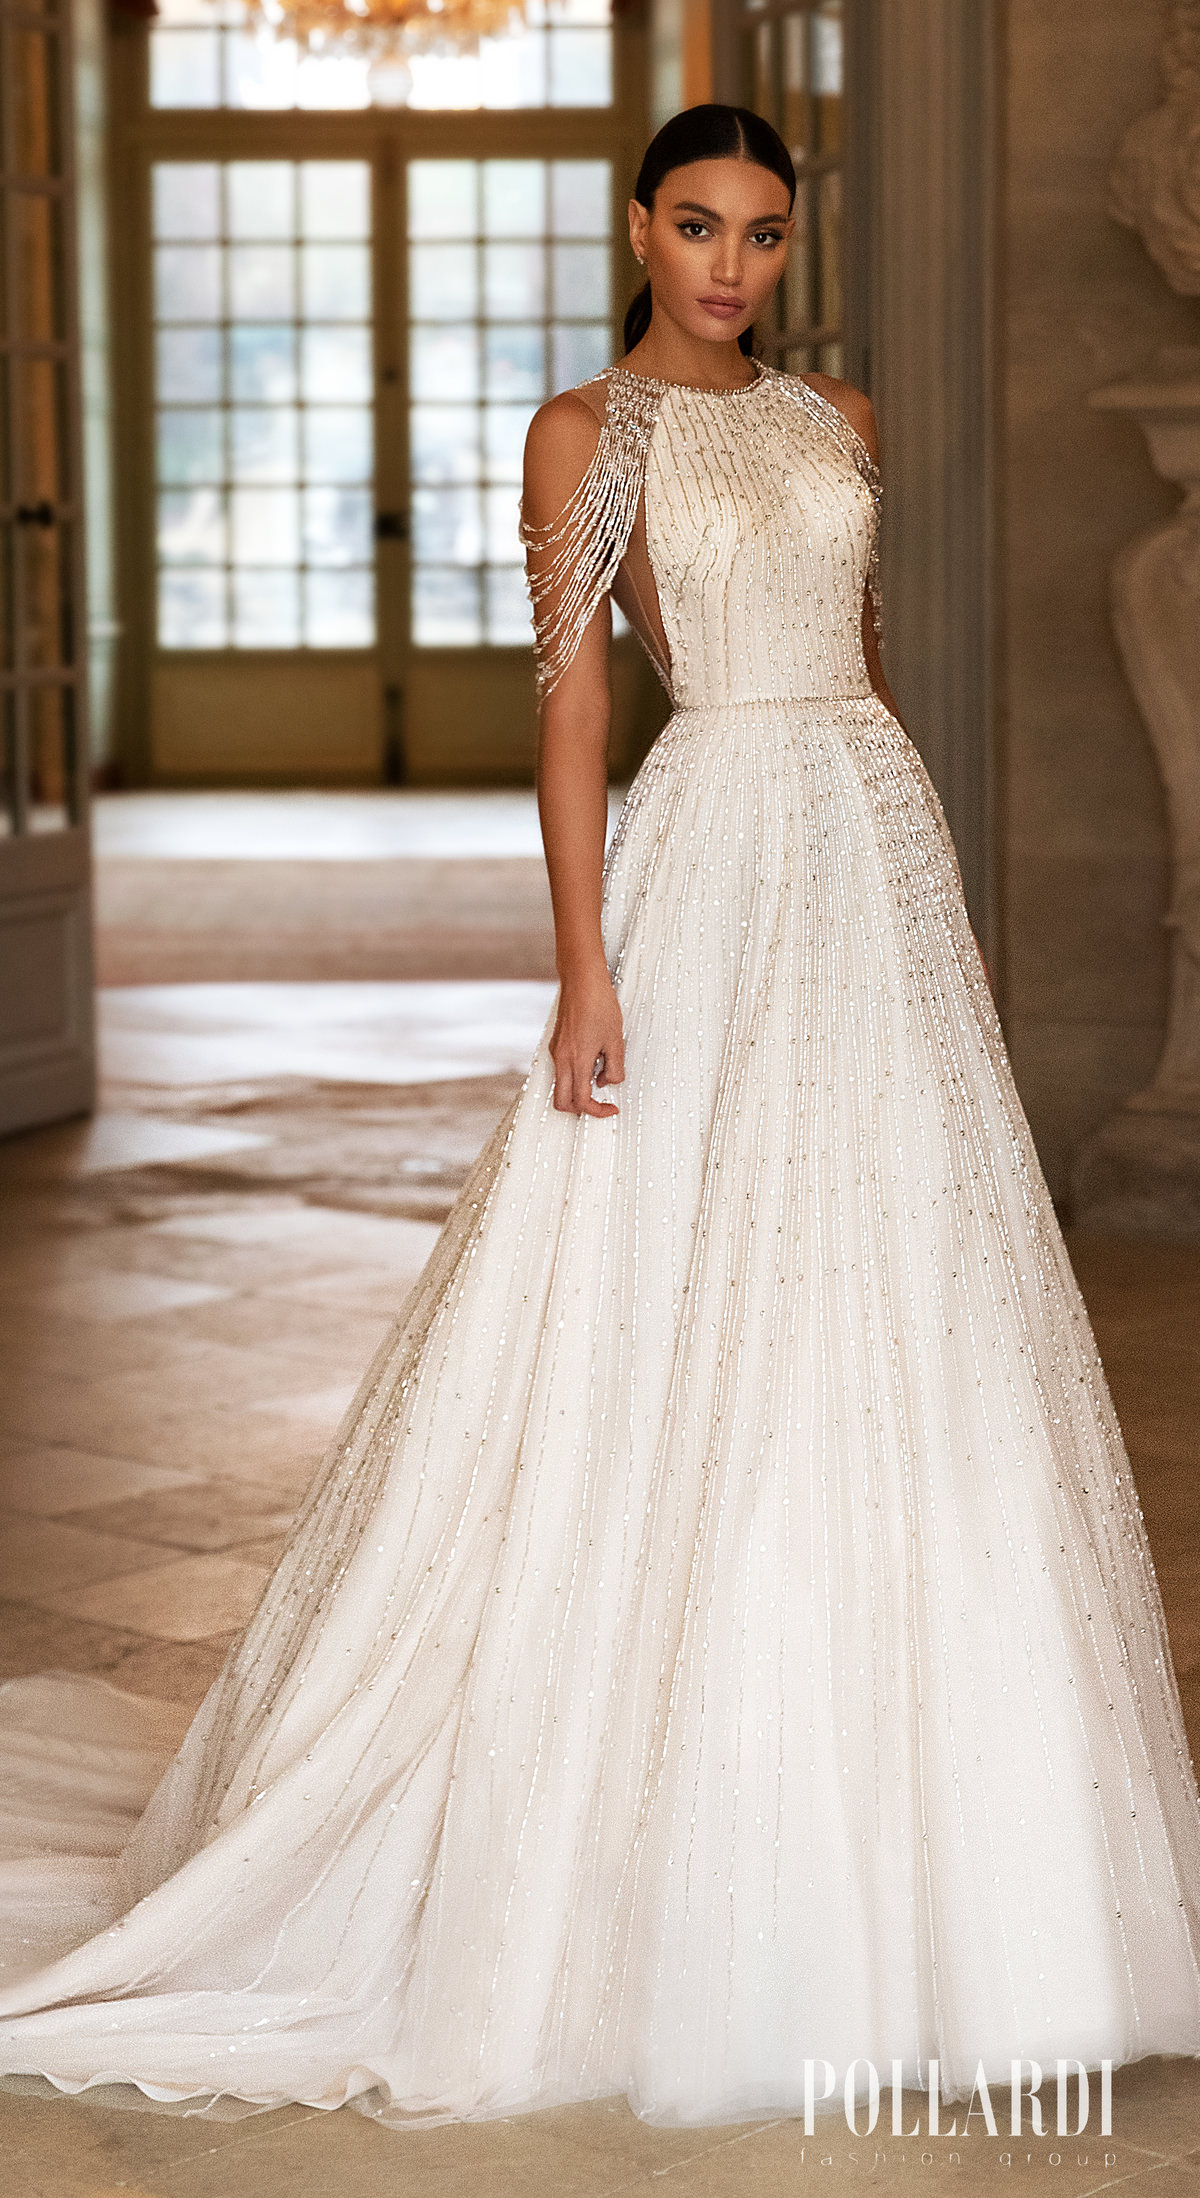 Pollardi Wedding Dresses 2021 Royalty Collection - Belle The Magazine